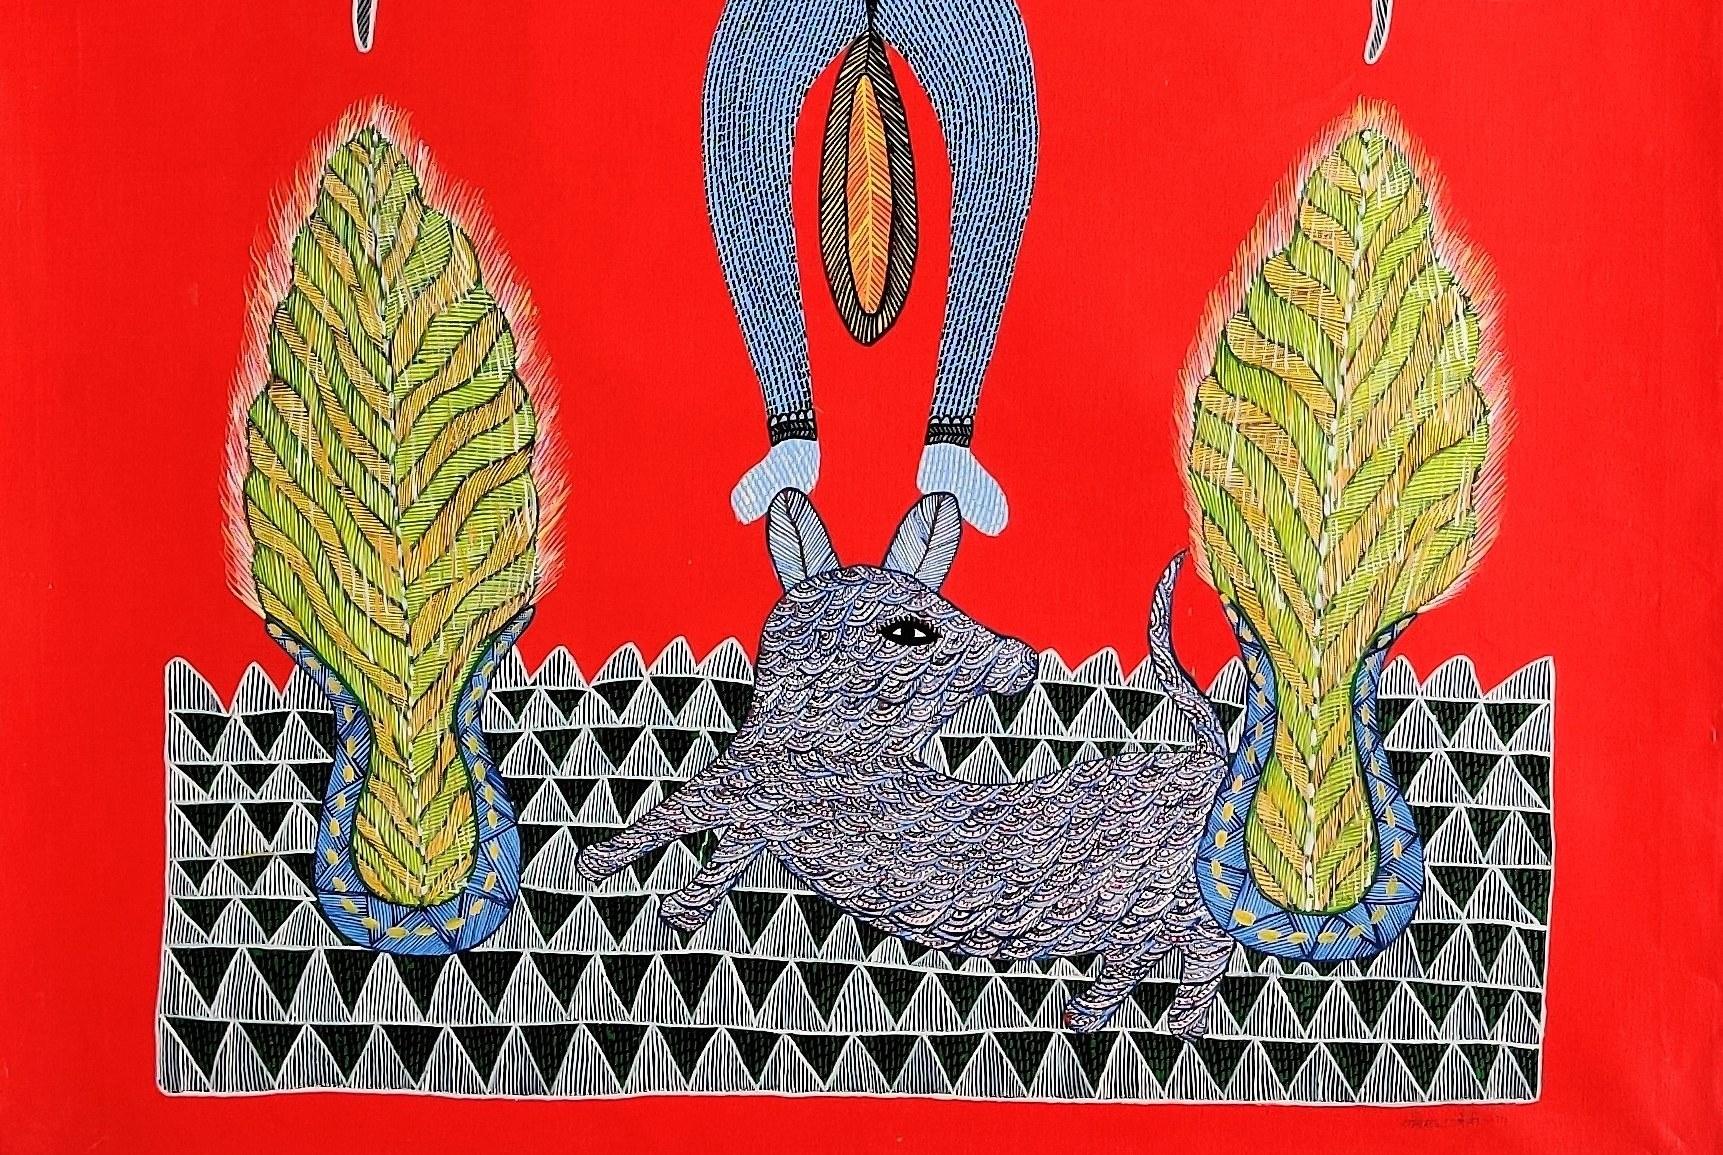 Fulabari Devi - Ram Singh Urveti, 21st Century, Indian contemporary painting 2